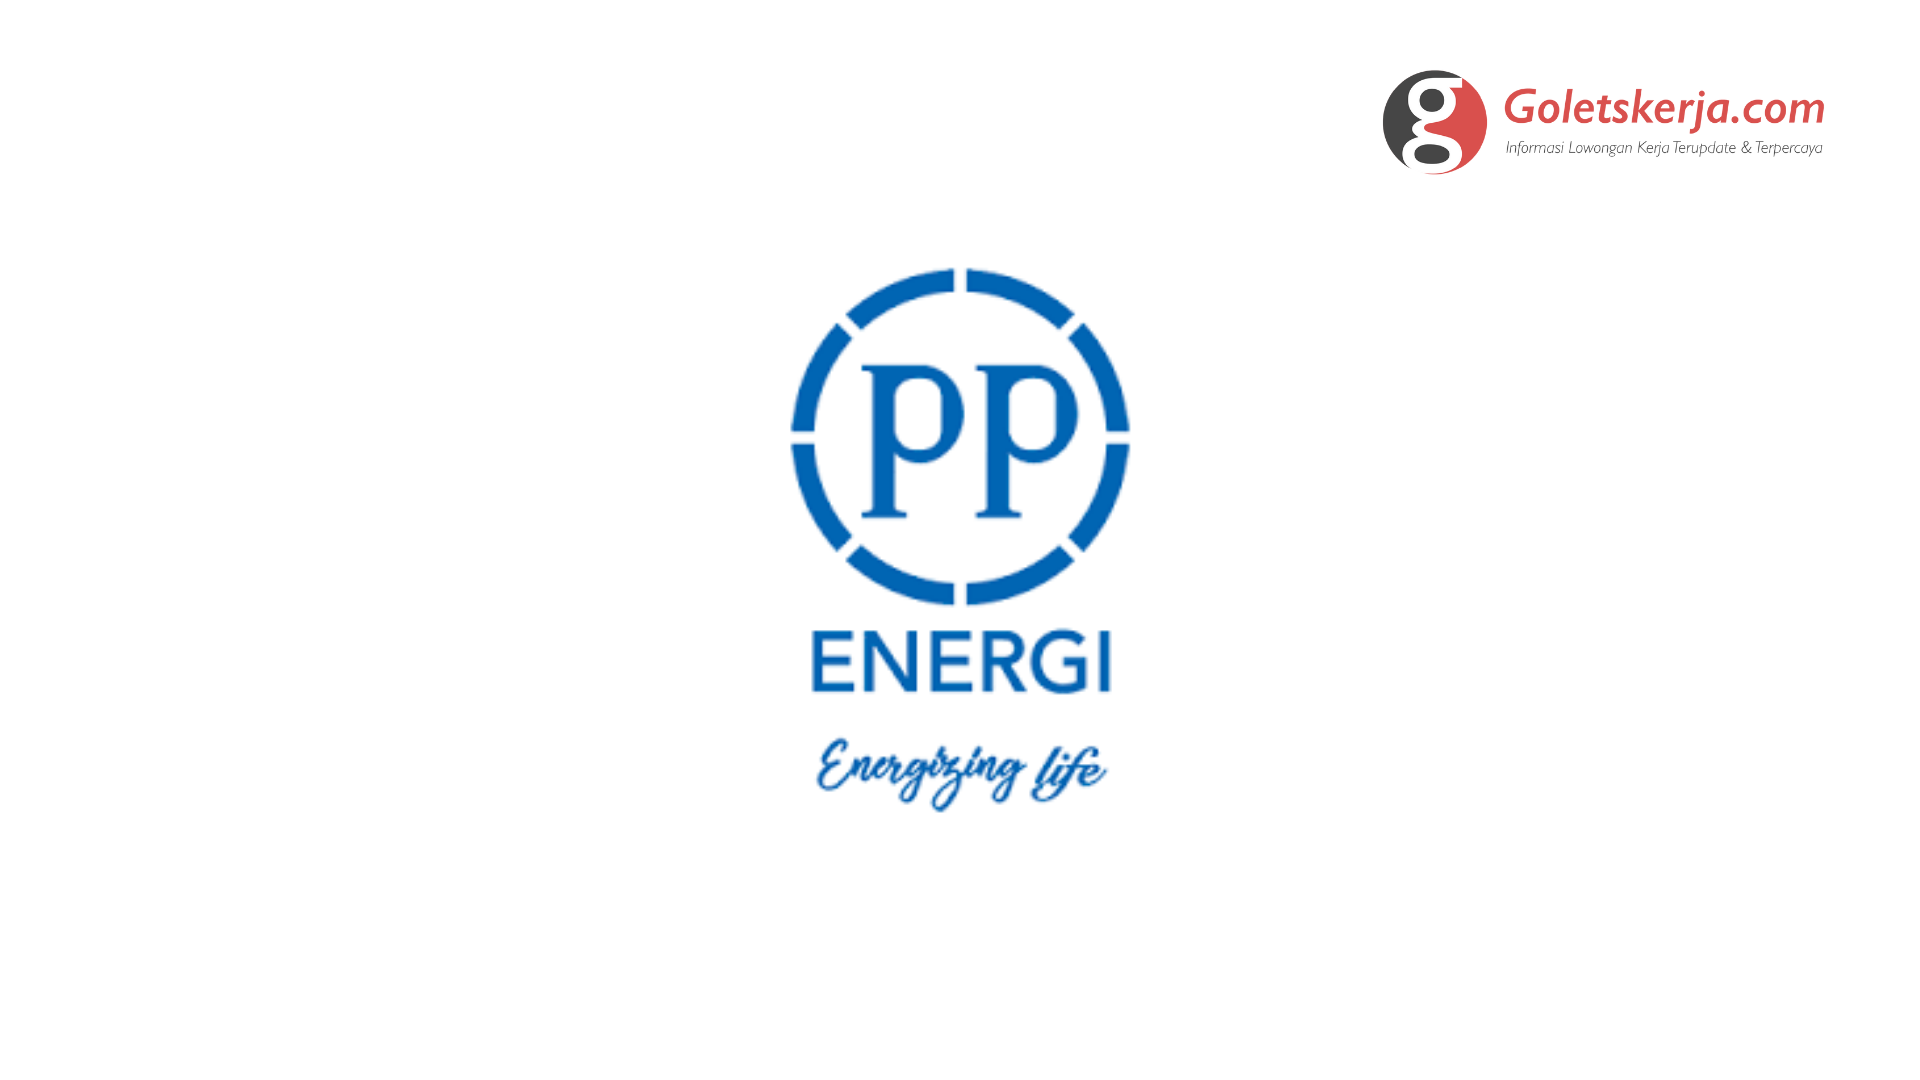 Lowongan Kerja PT PP Energi Tbk